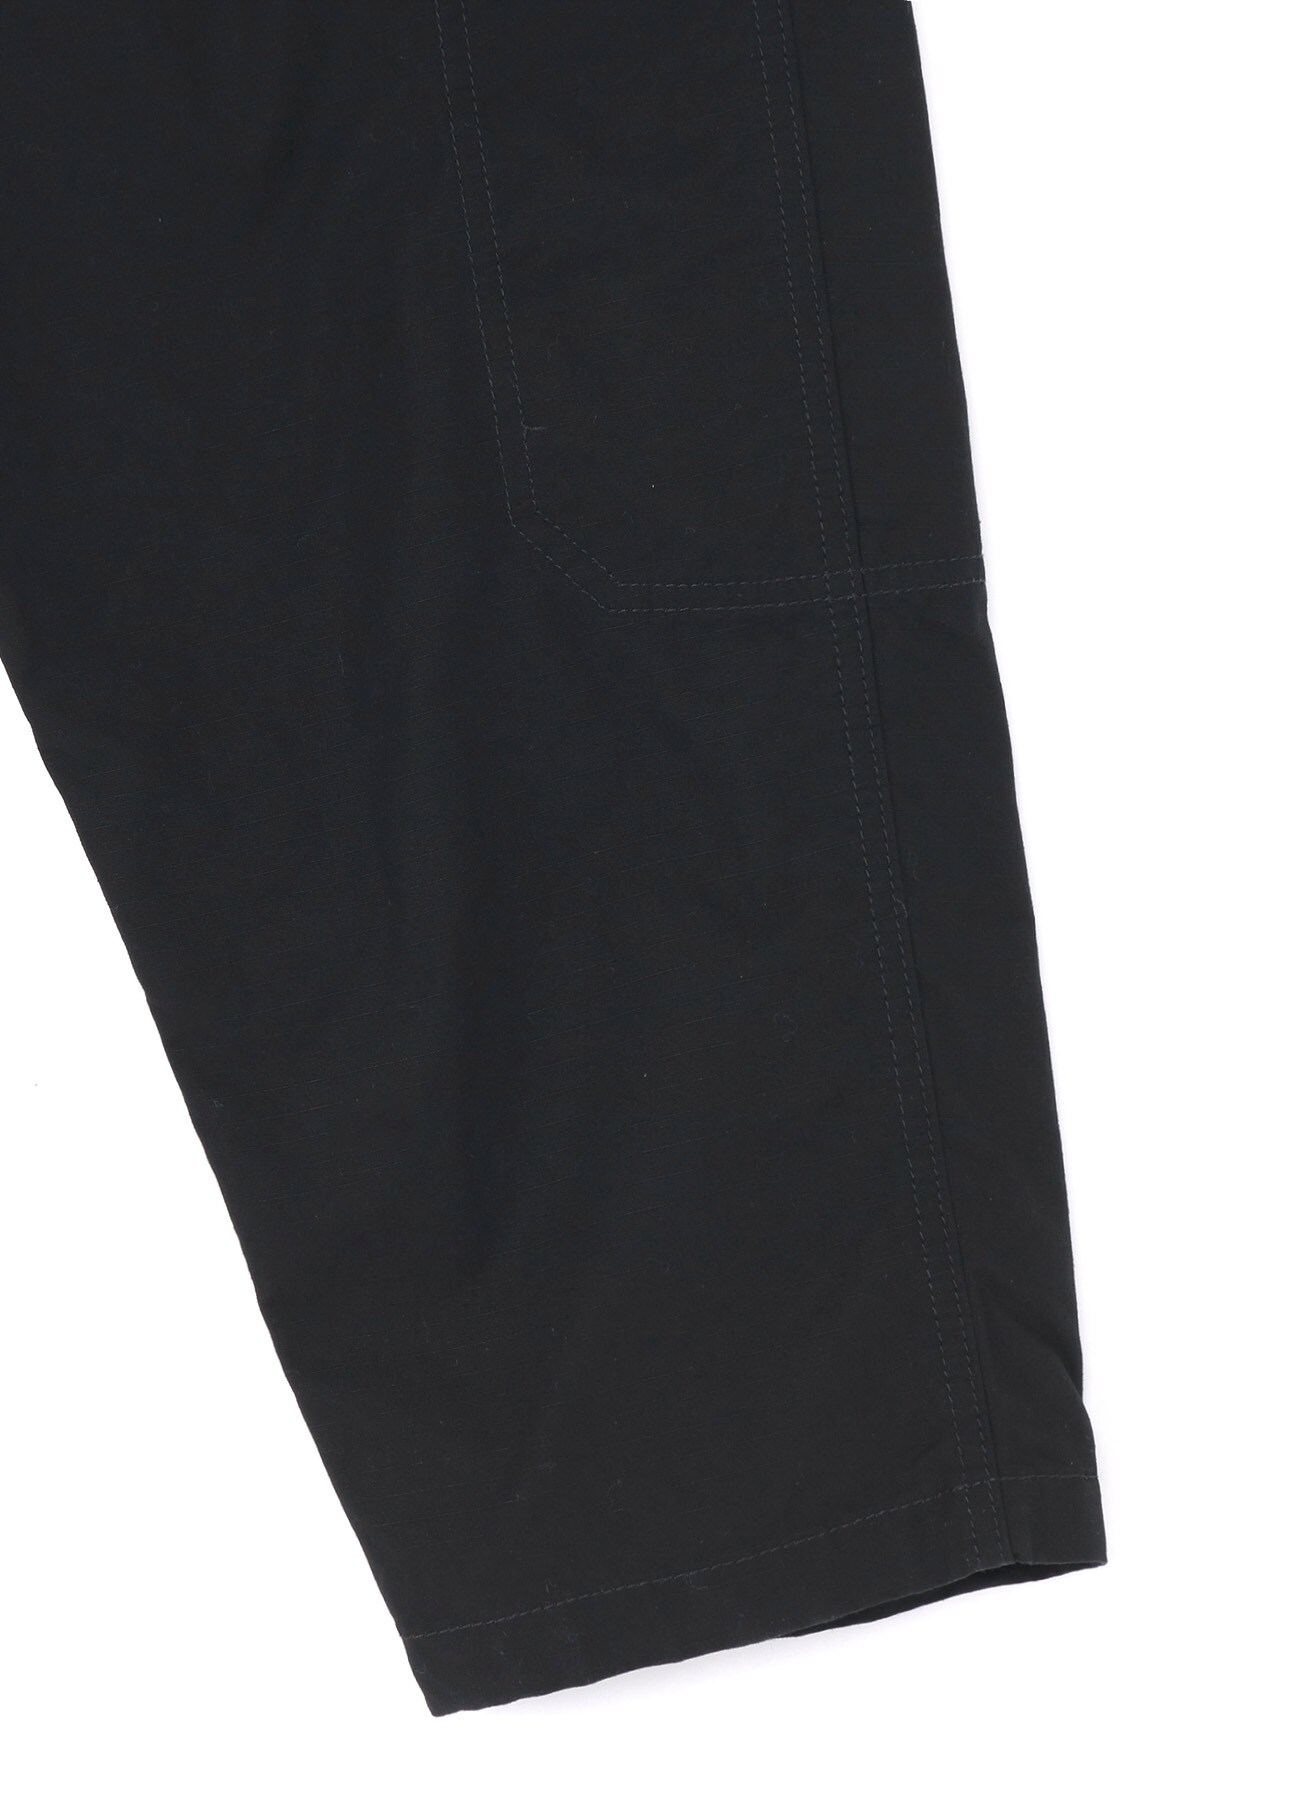 BLACK SCANDAL LIP A-SIDE TUCK PANTS